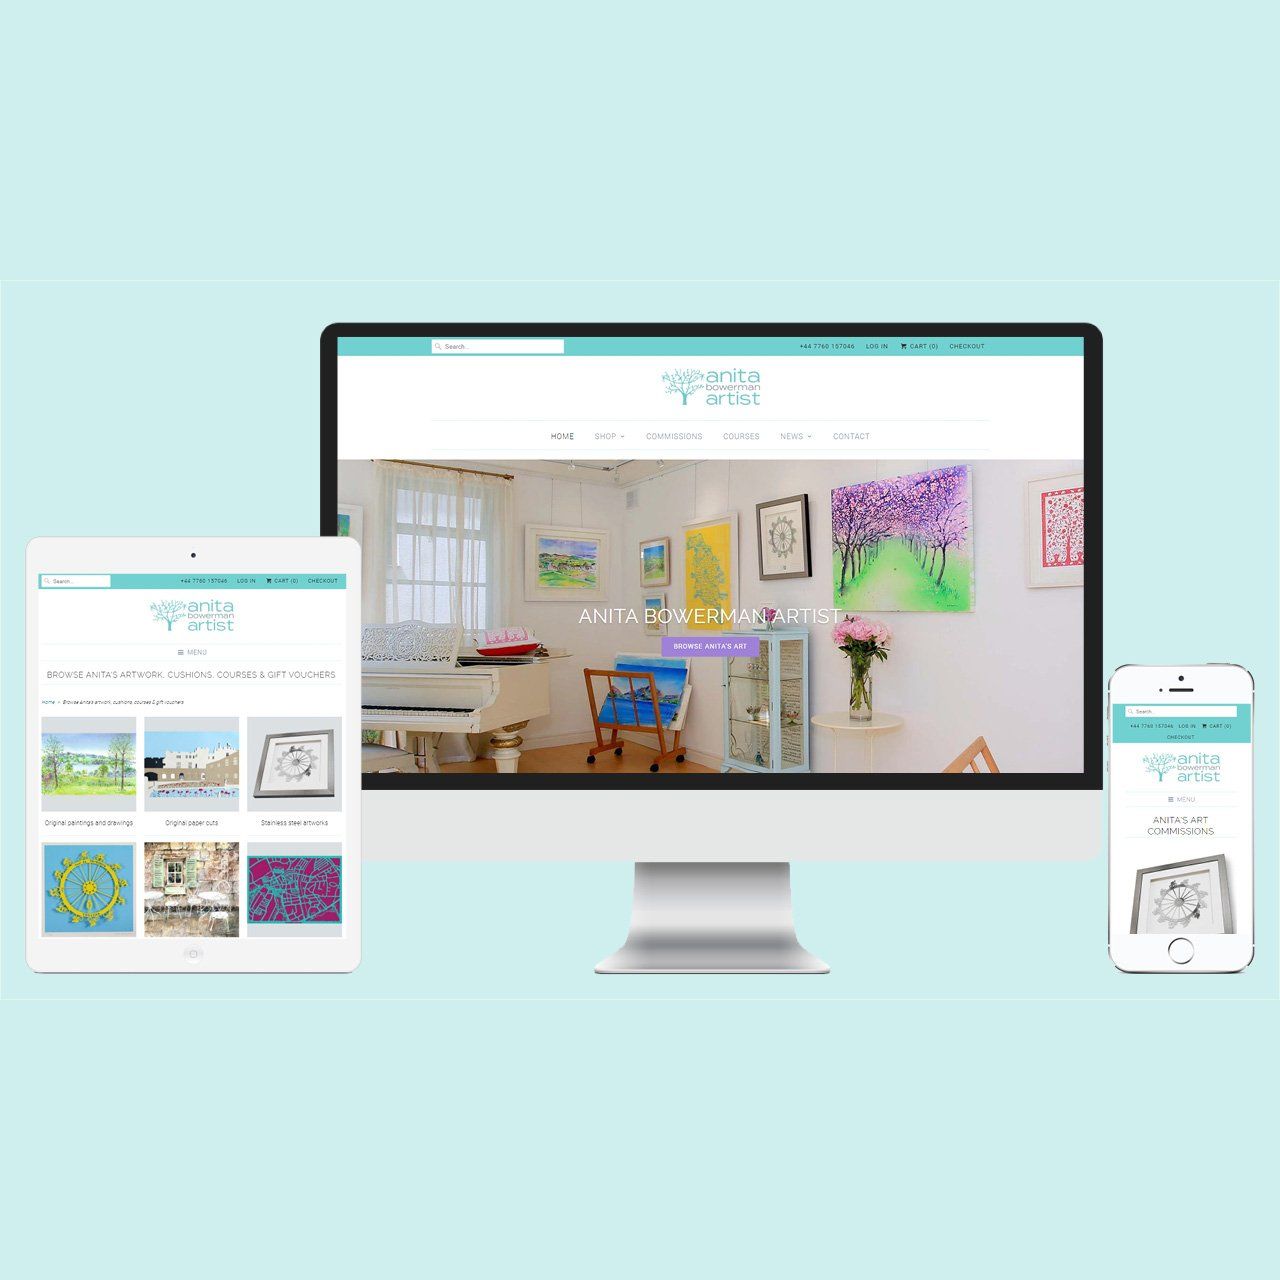 Anita Bowerman Artist ecommerce website design showing site on desktop, tablet and smartphone